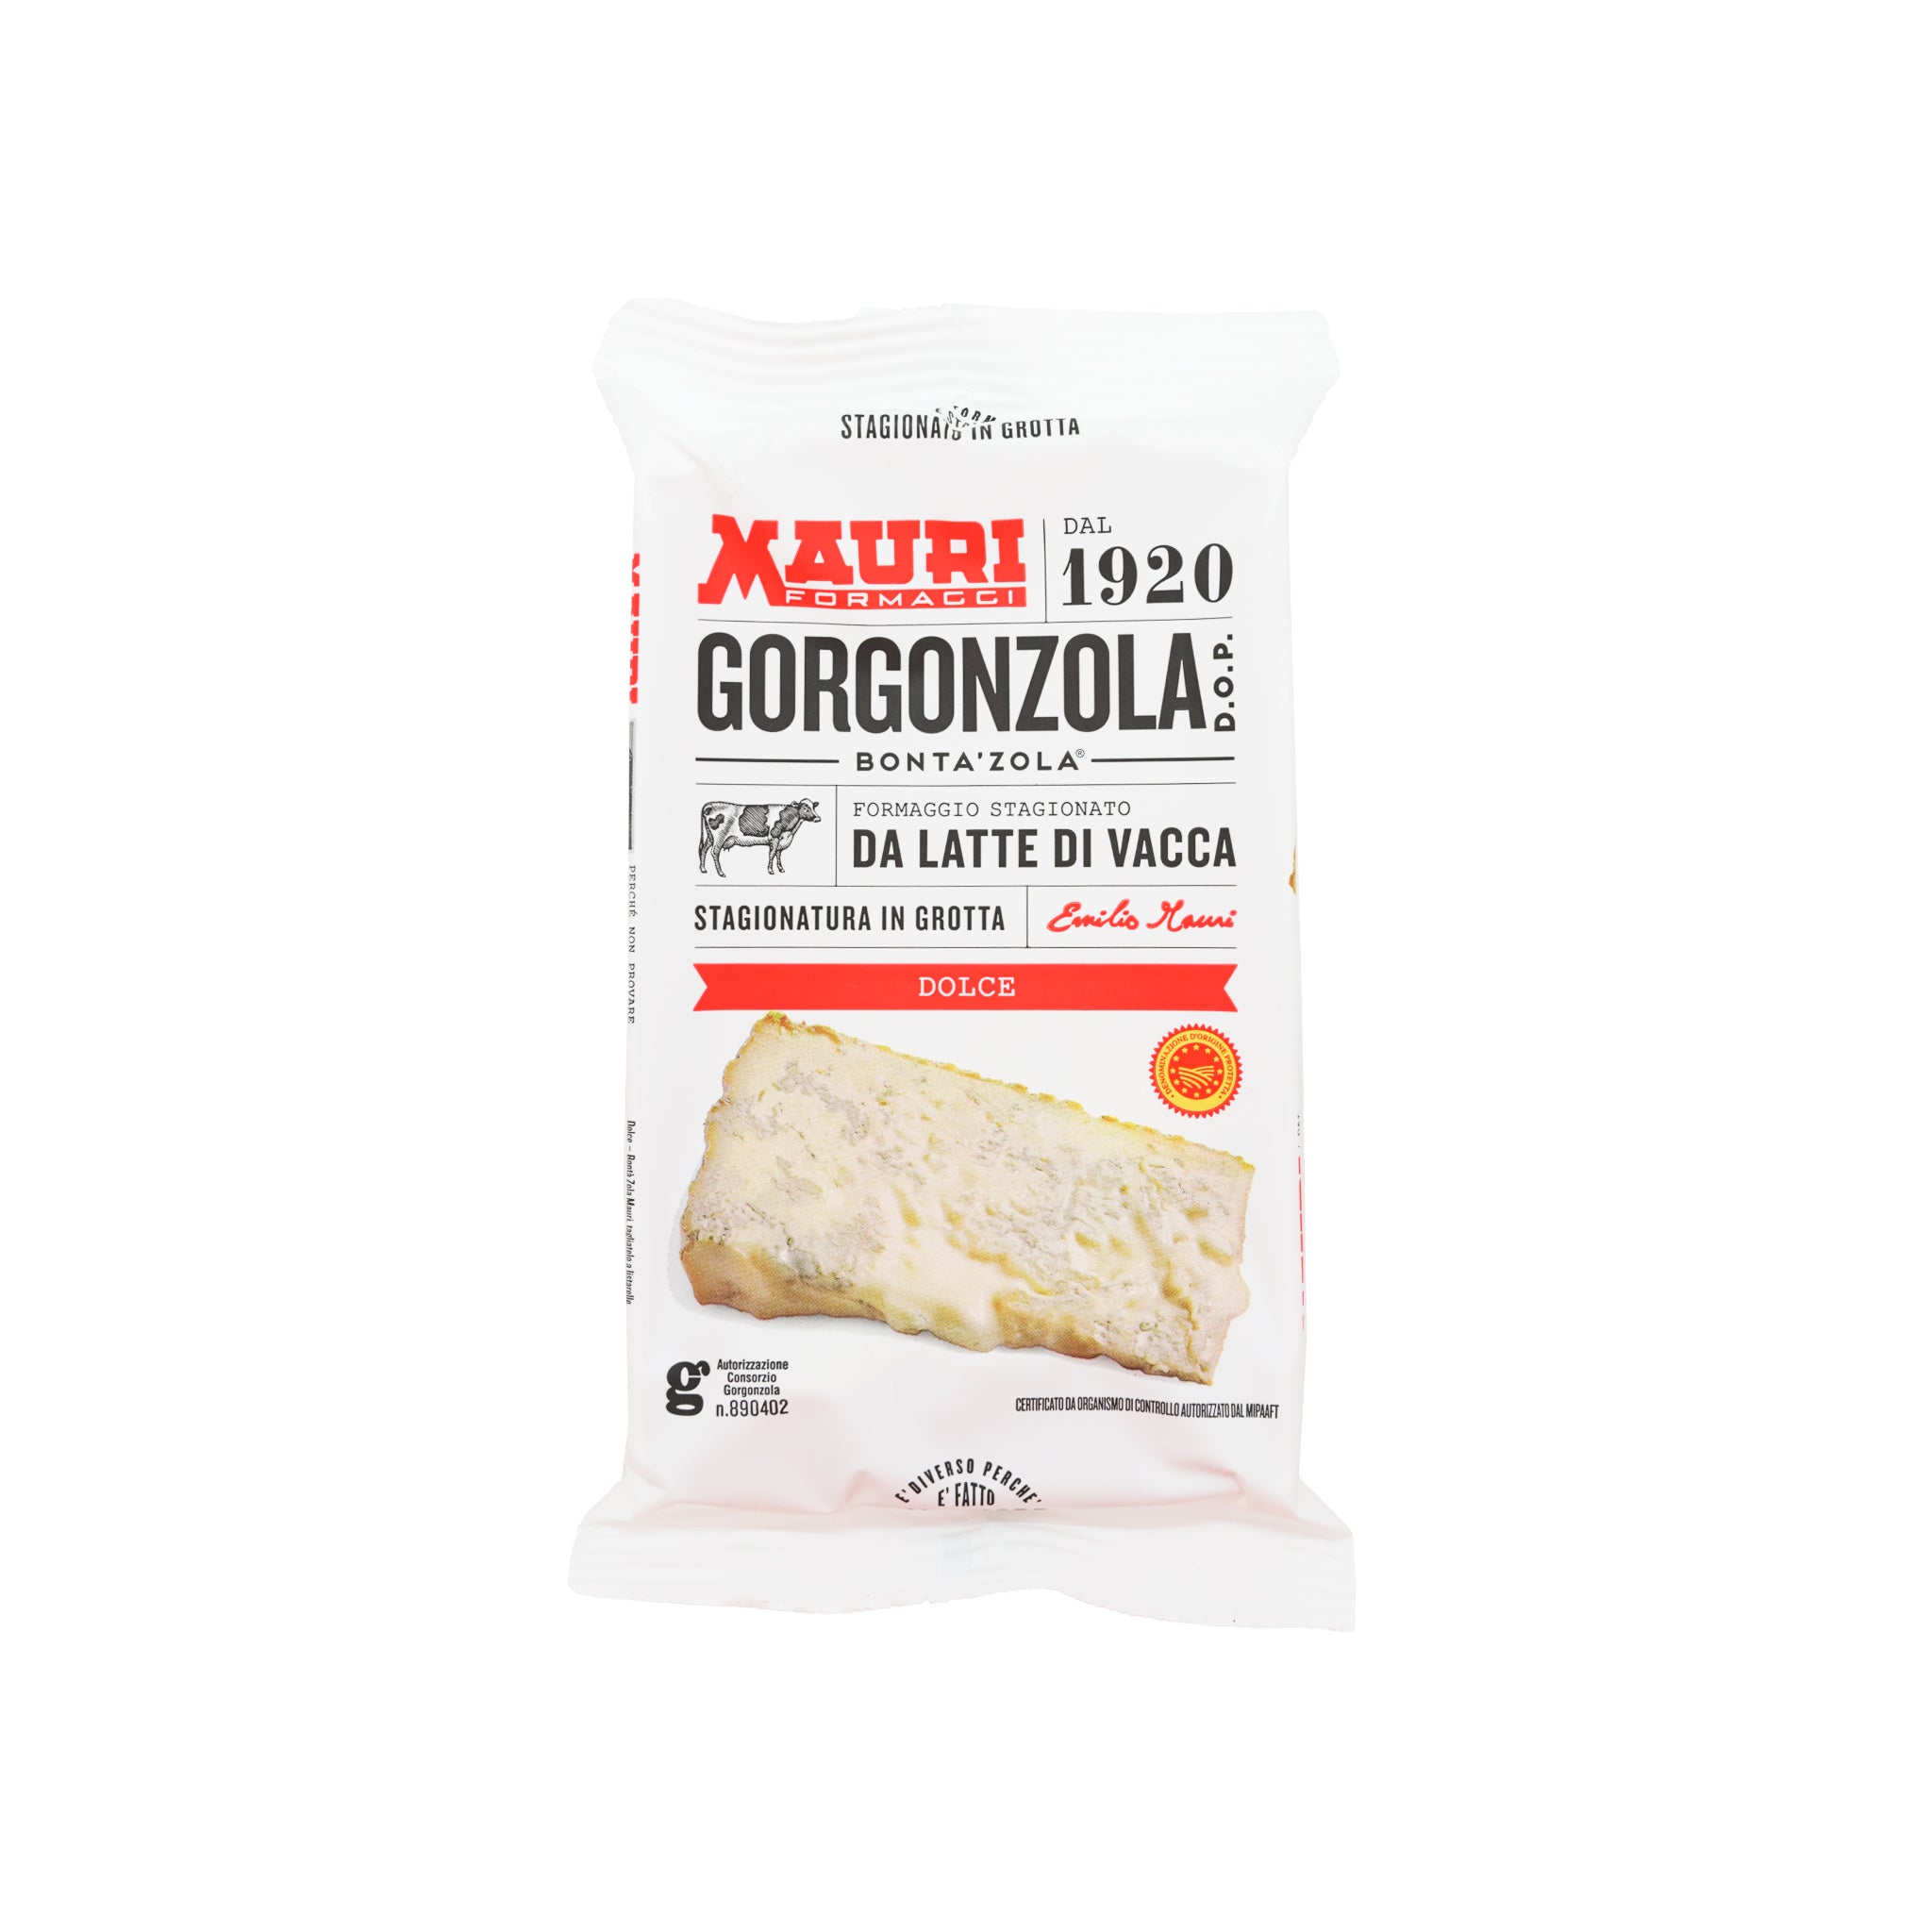 gorgonzola mauri cheese dolce sweet formaggio